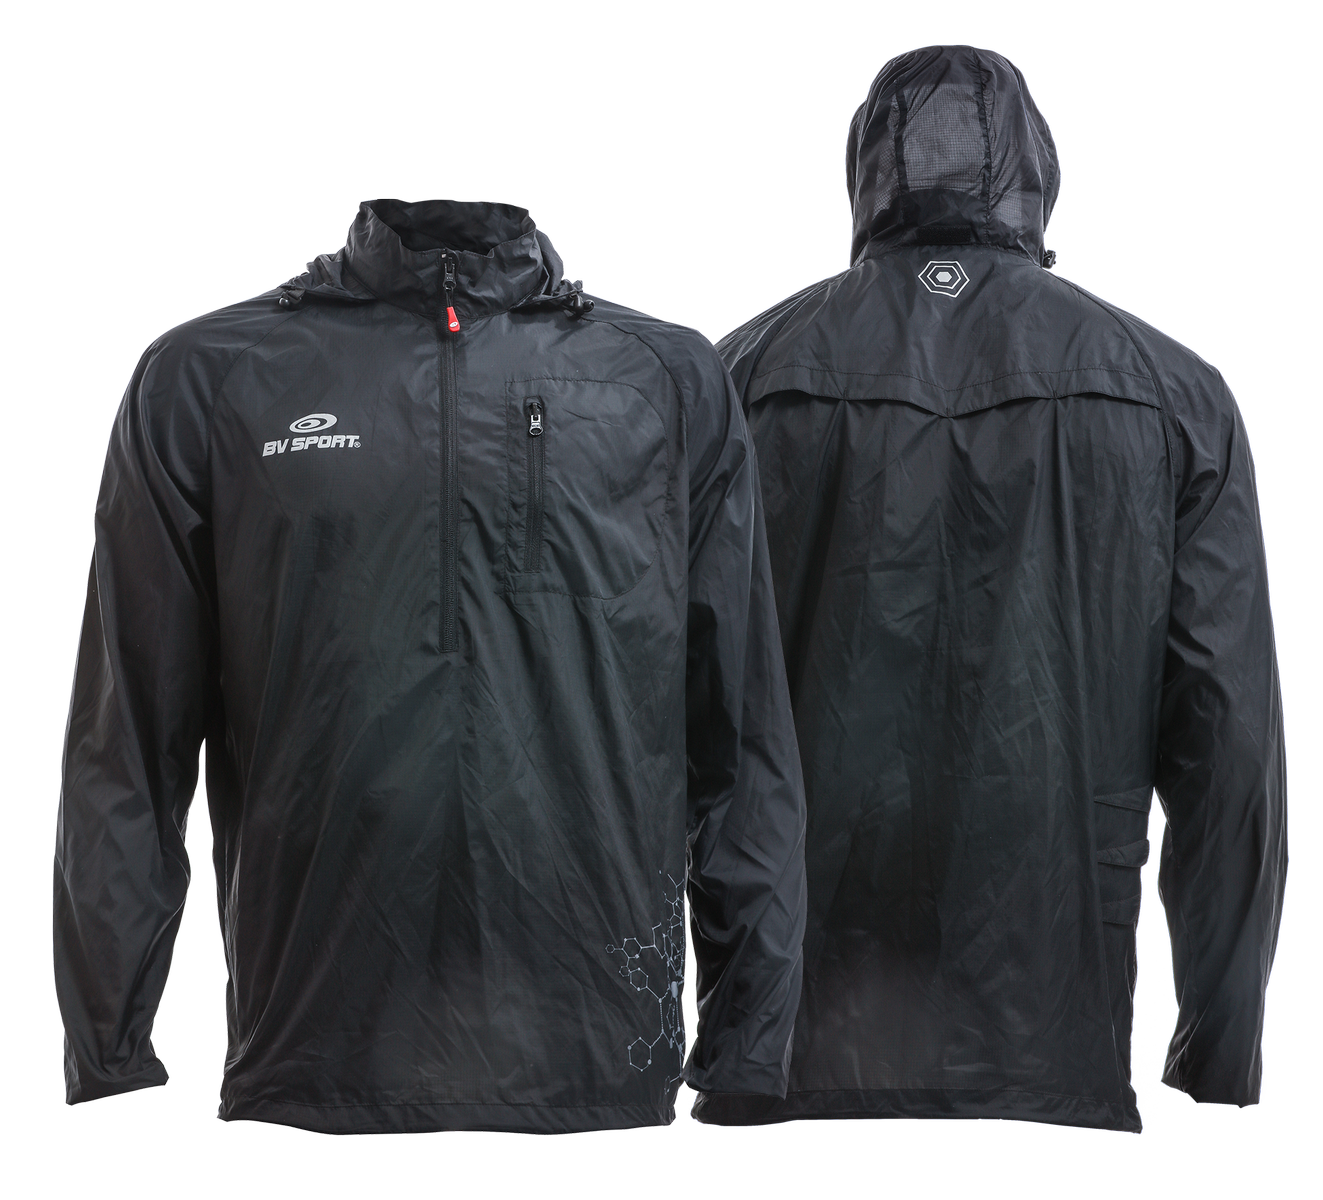 BV Sport - Jacket Ball - Outdoor jacket - Men's